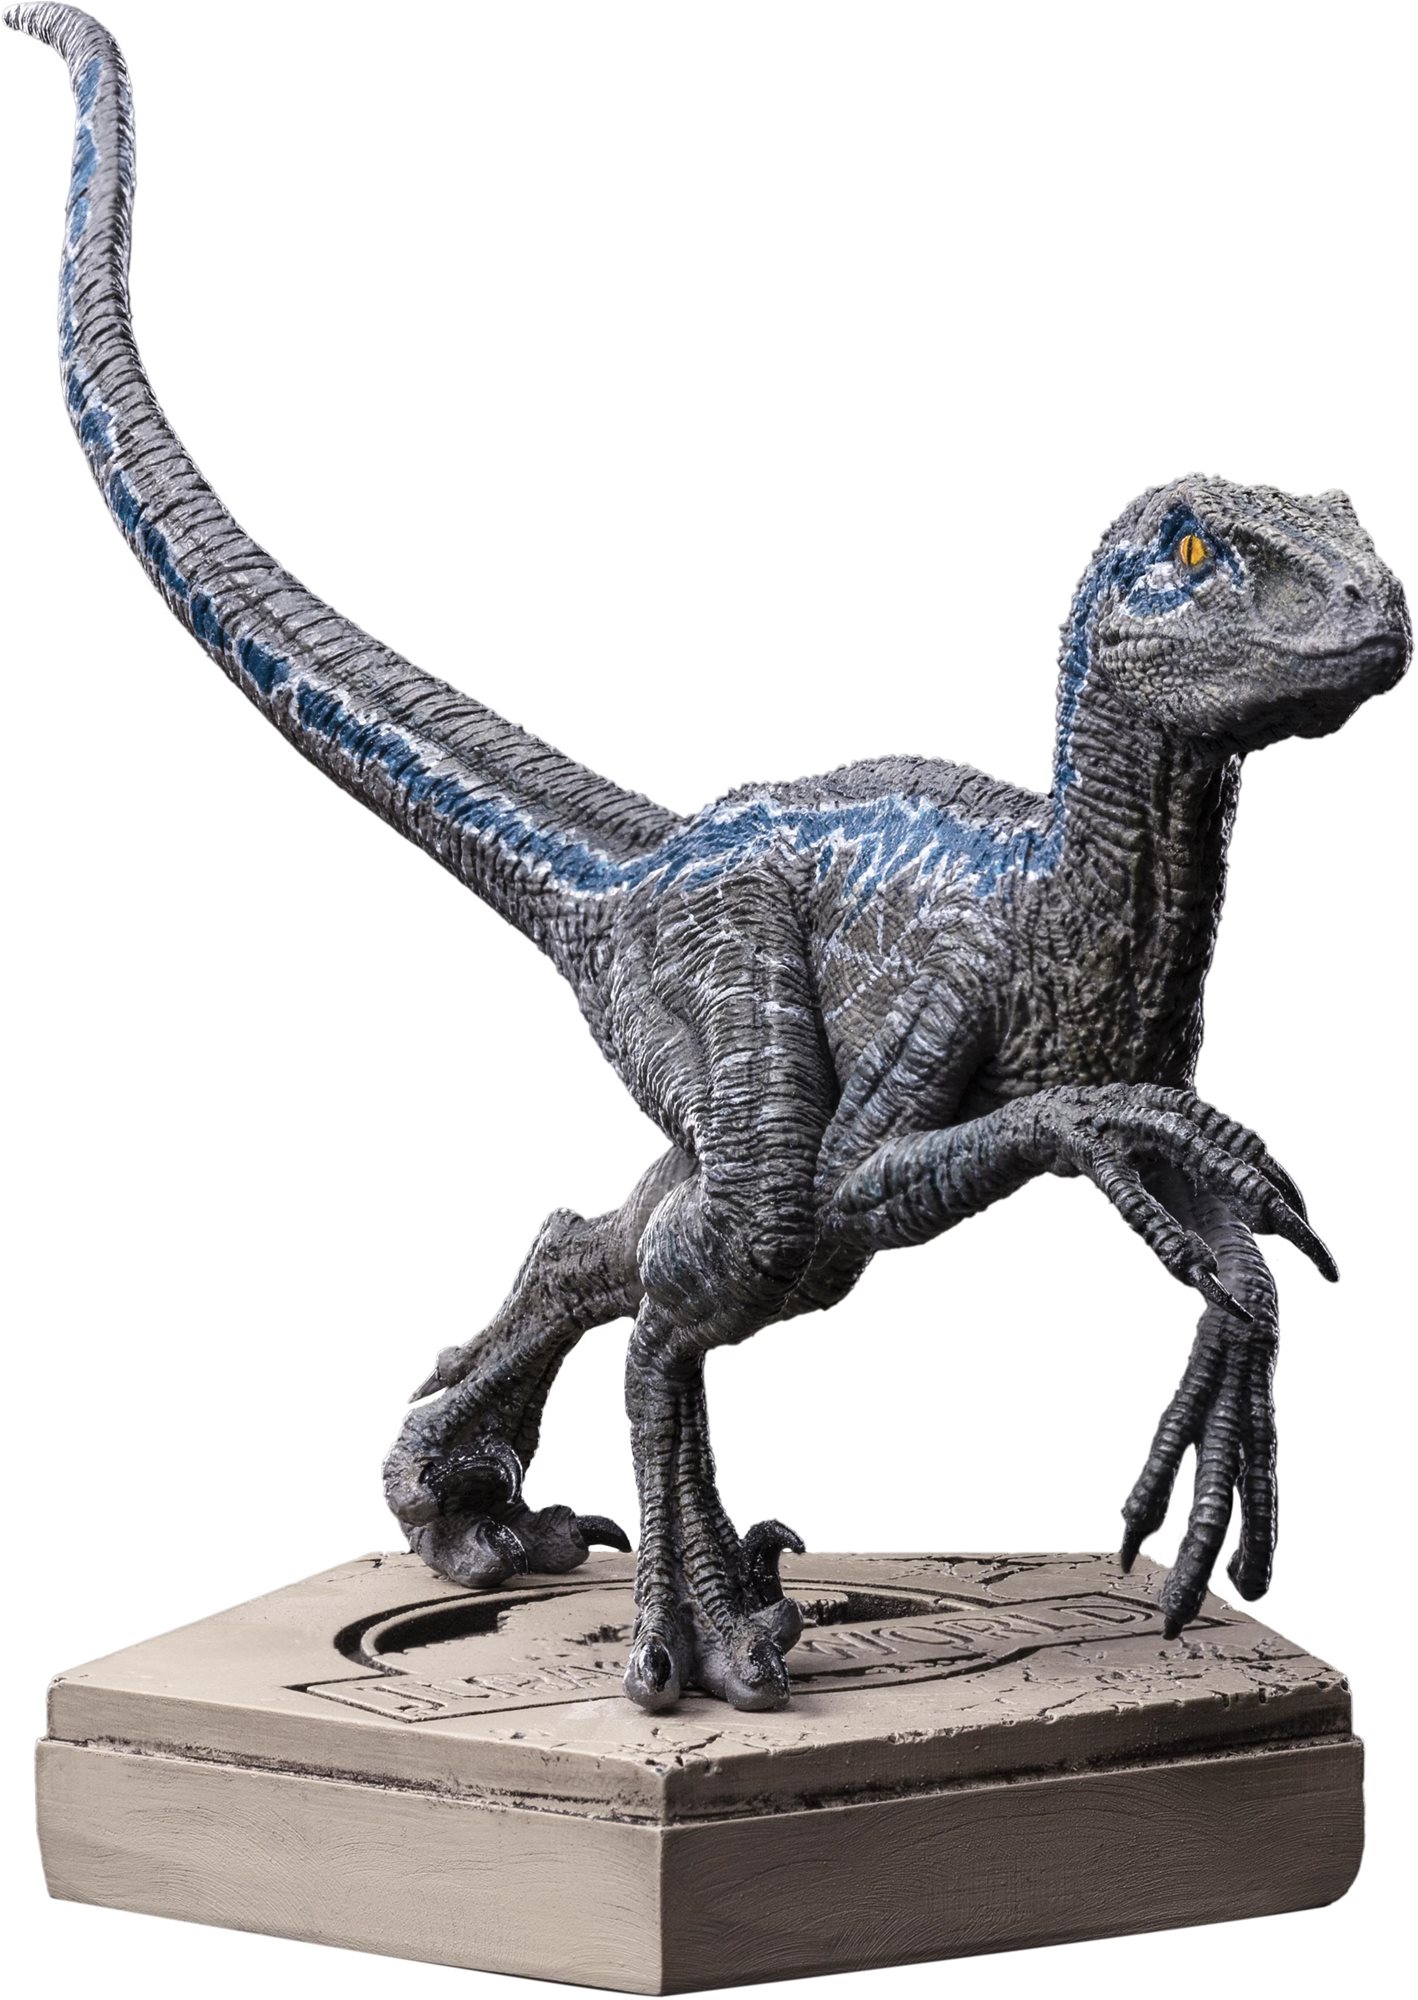 Jurassic World - Velociraptor Blue - Icons Iron Studio